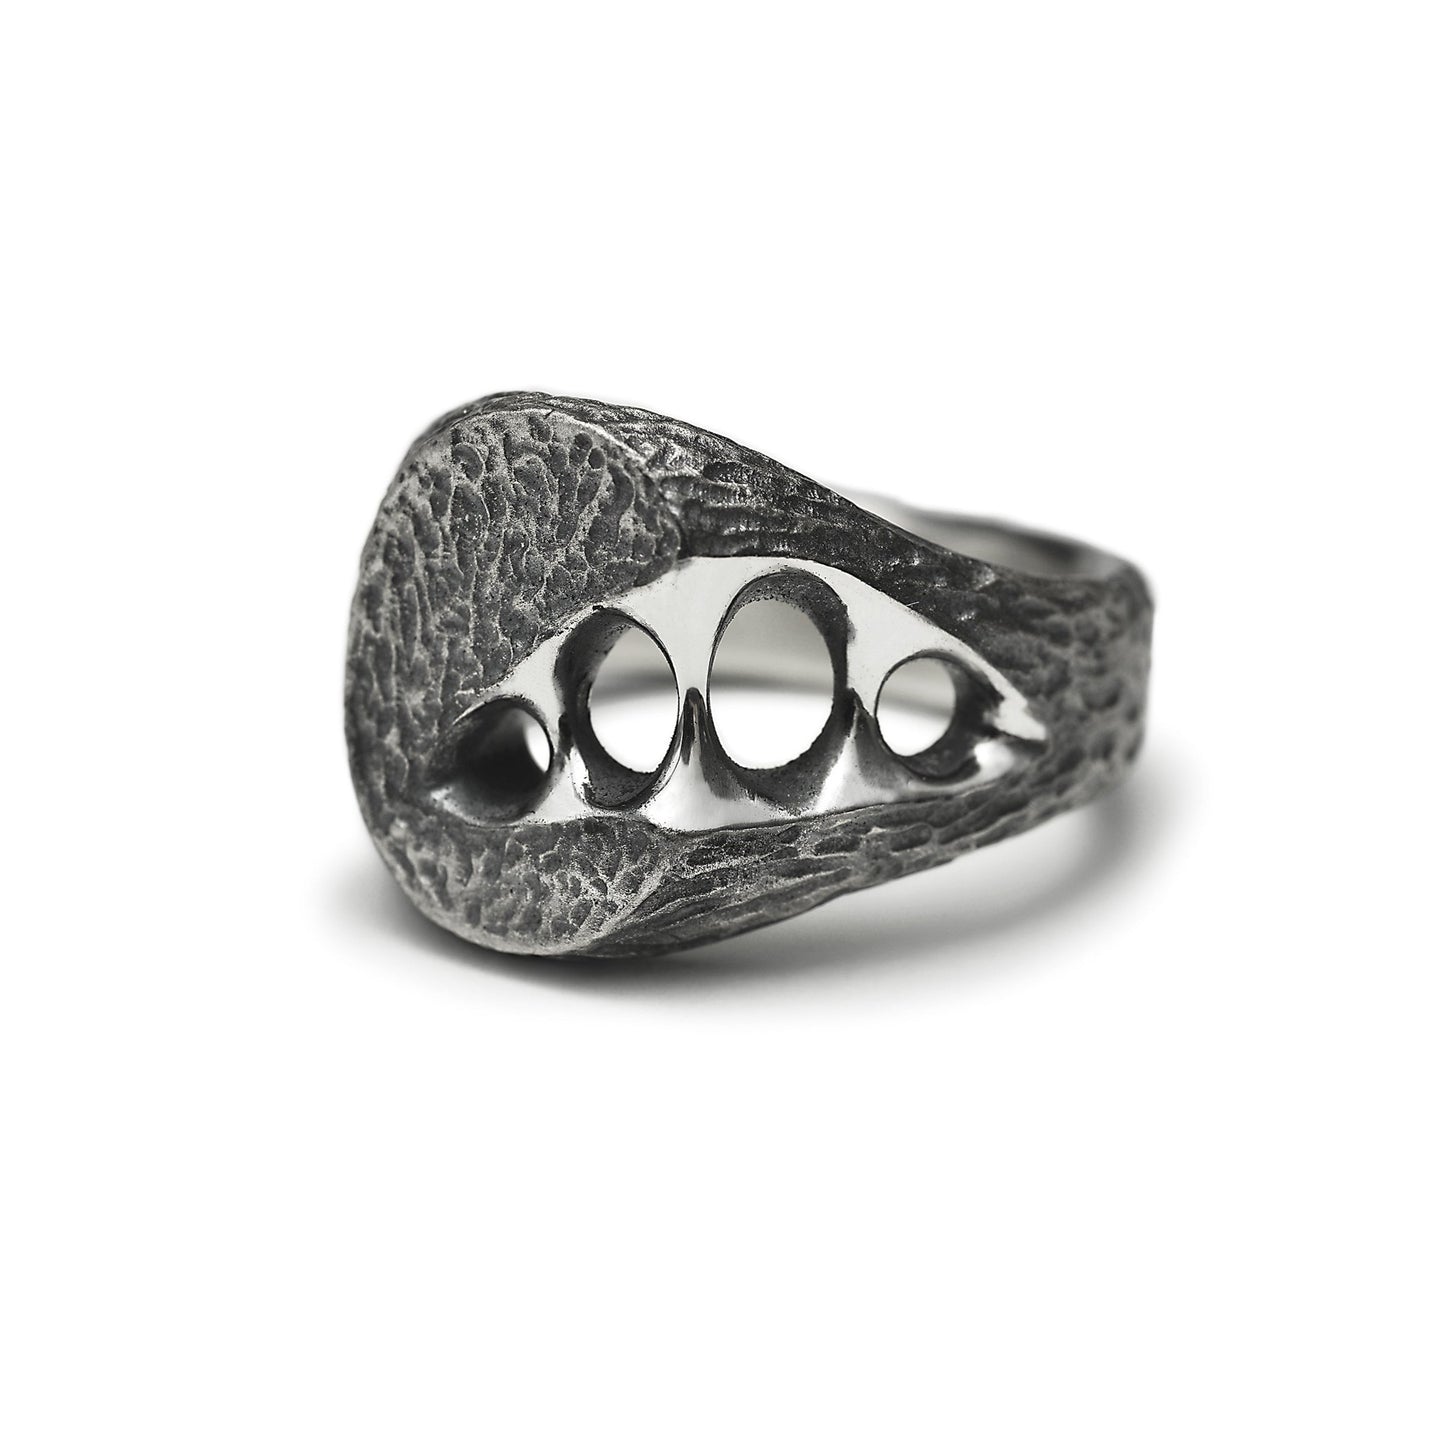 R-99 Eternal - oval sterling silver signet ring